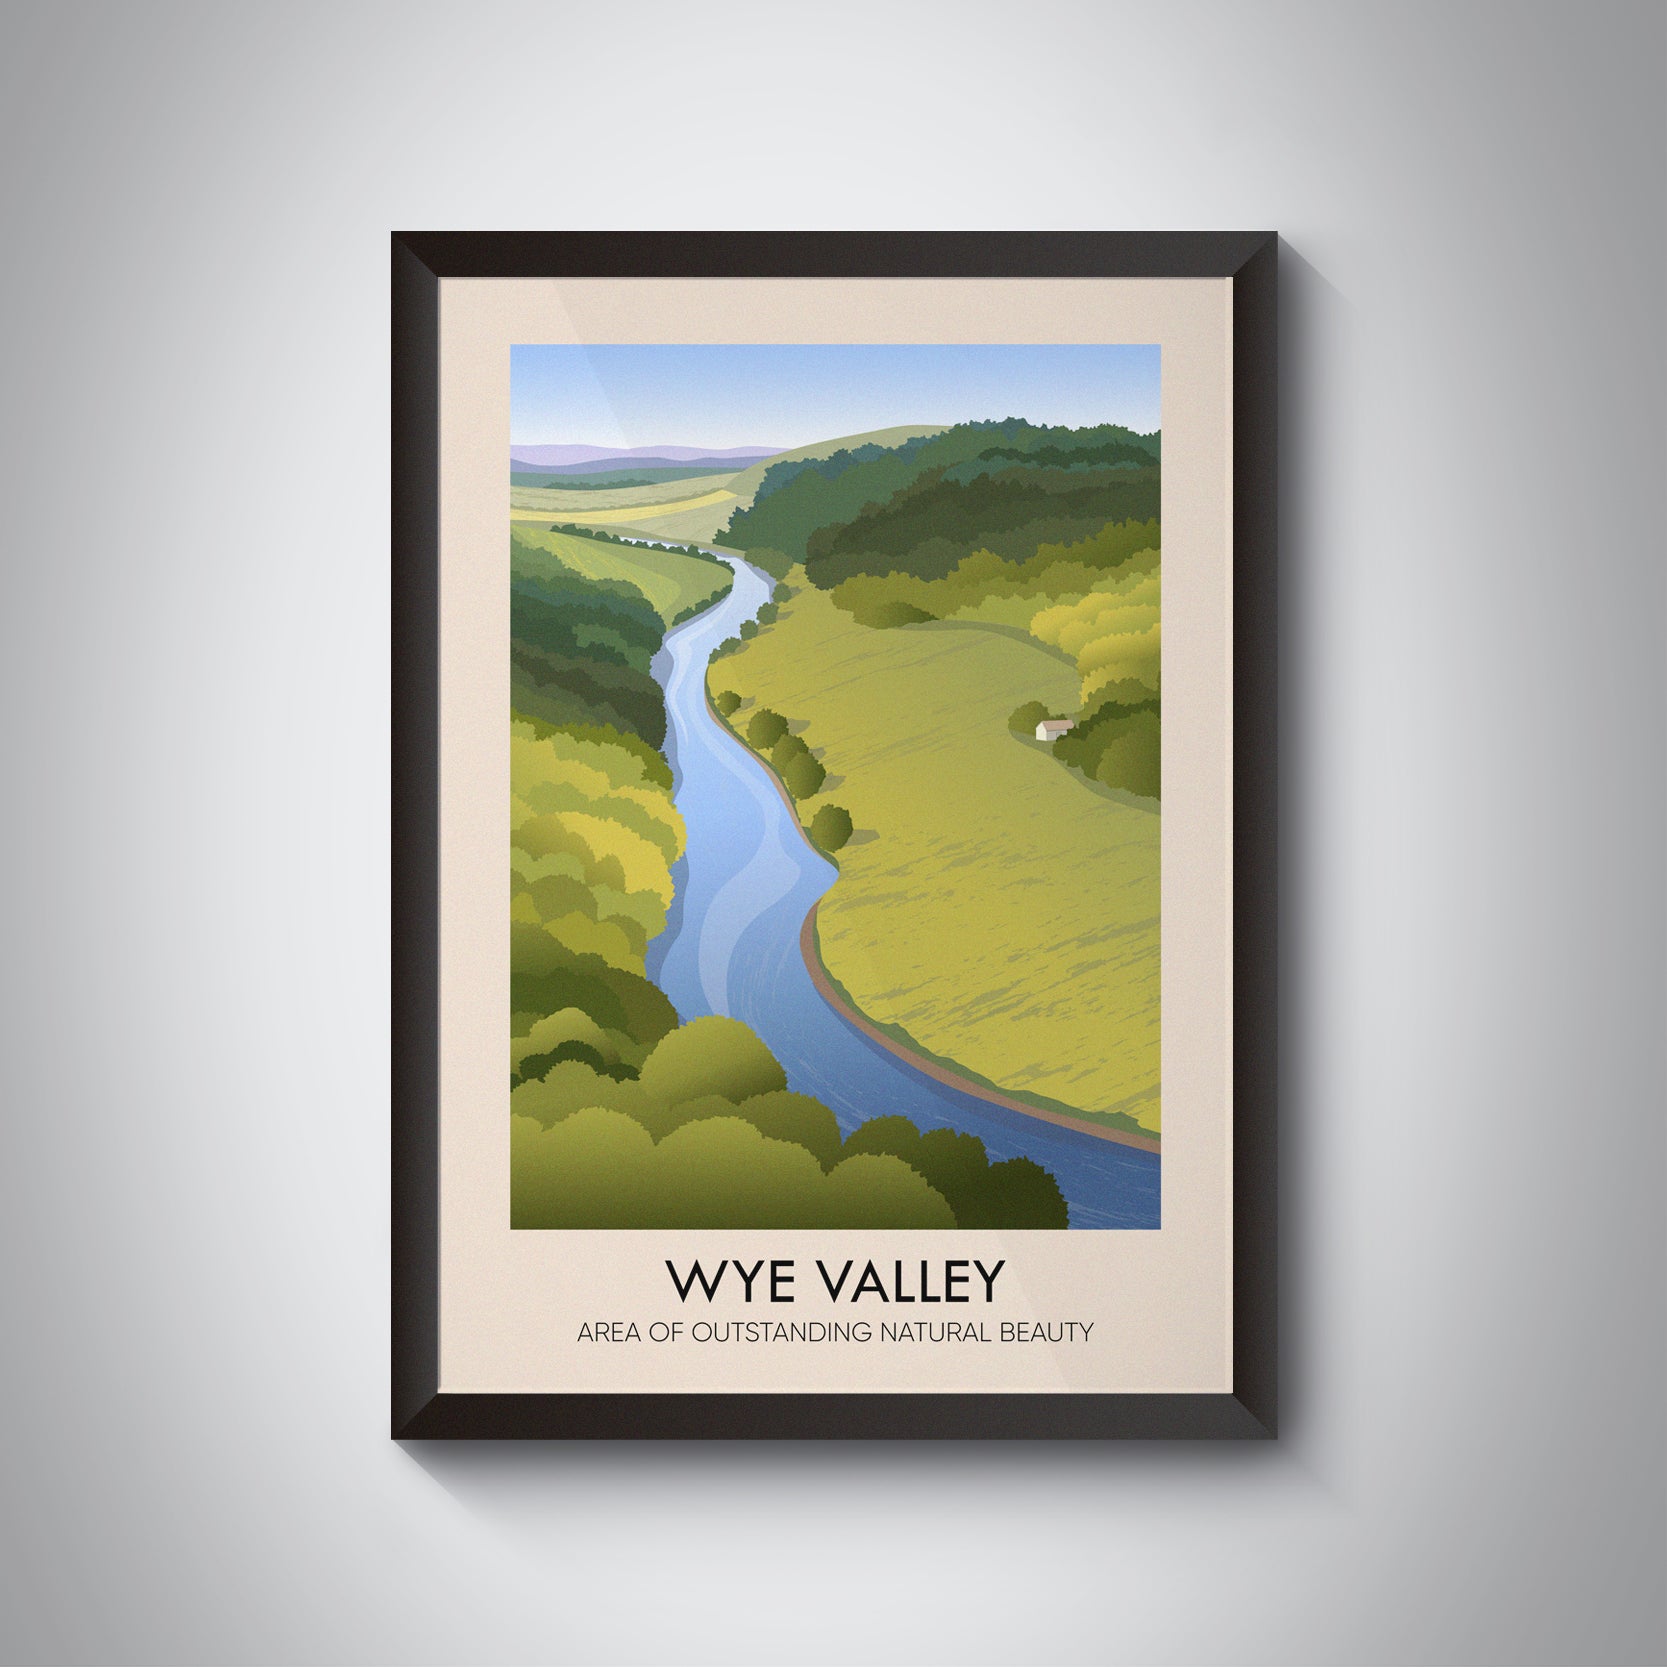 Wye Valley AONB Travel Poster